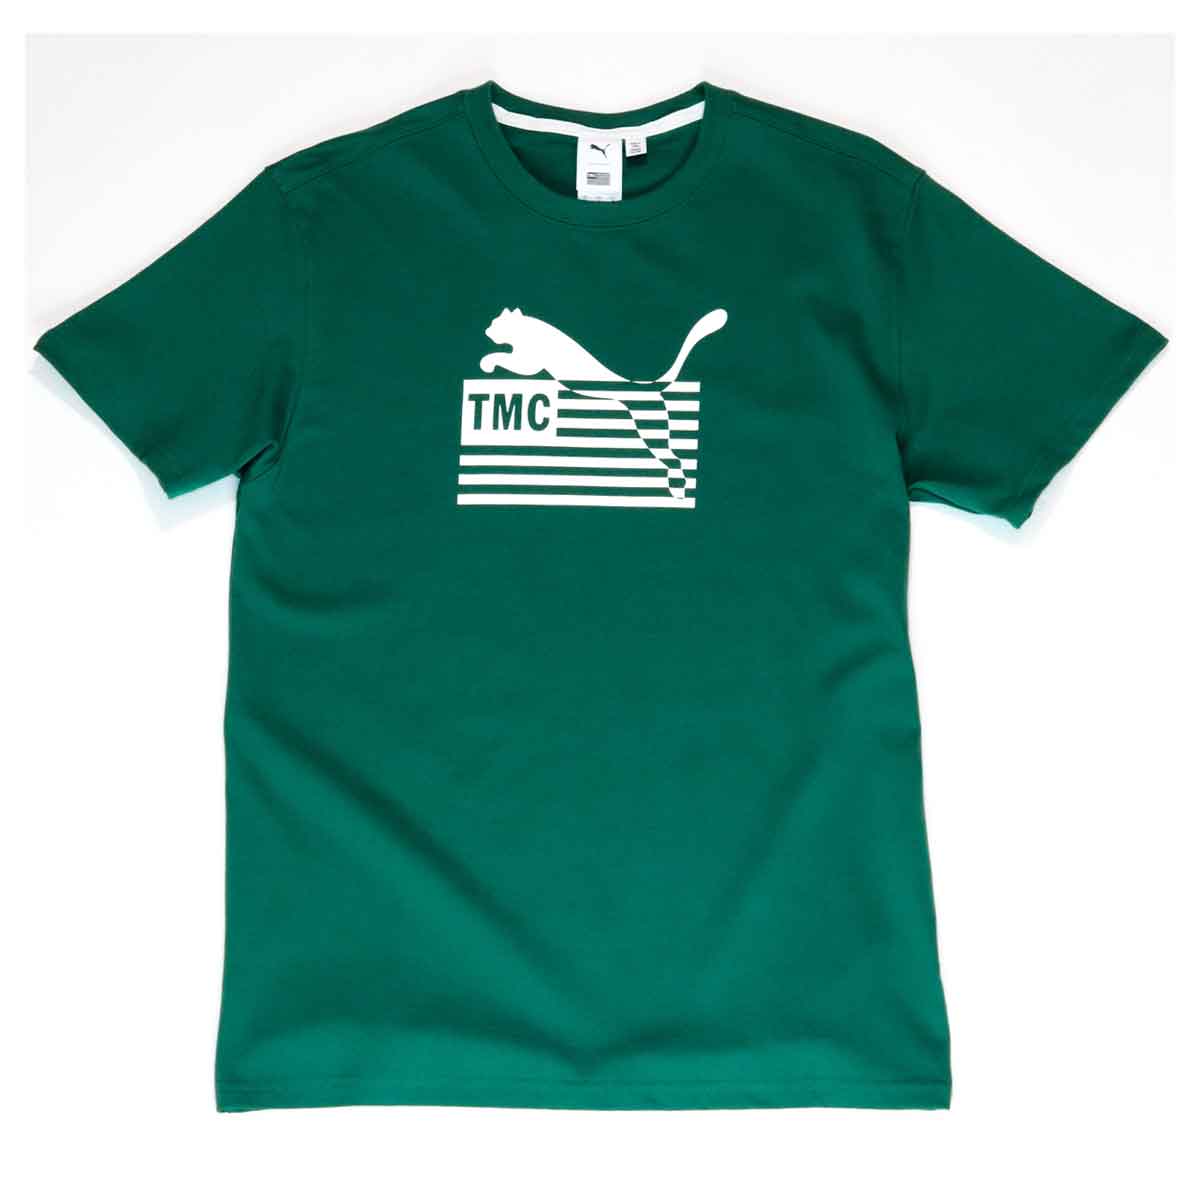 PUMA x TMC Everyday Hussle T-shirt - On The Run Green